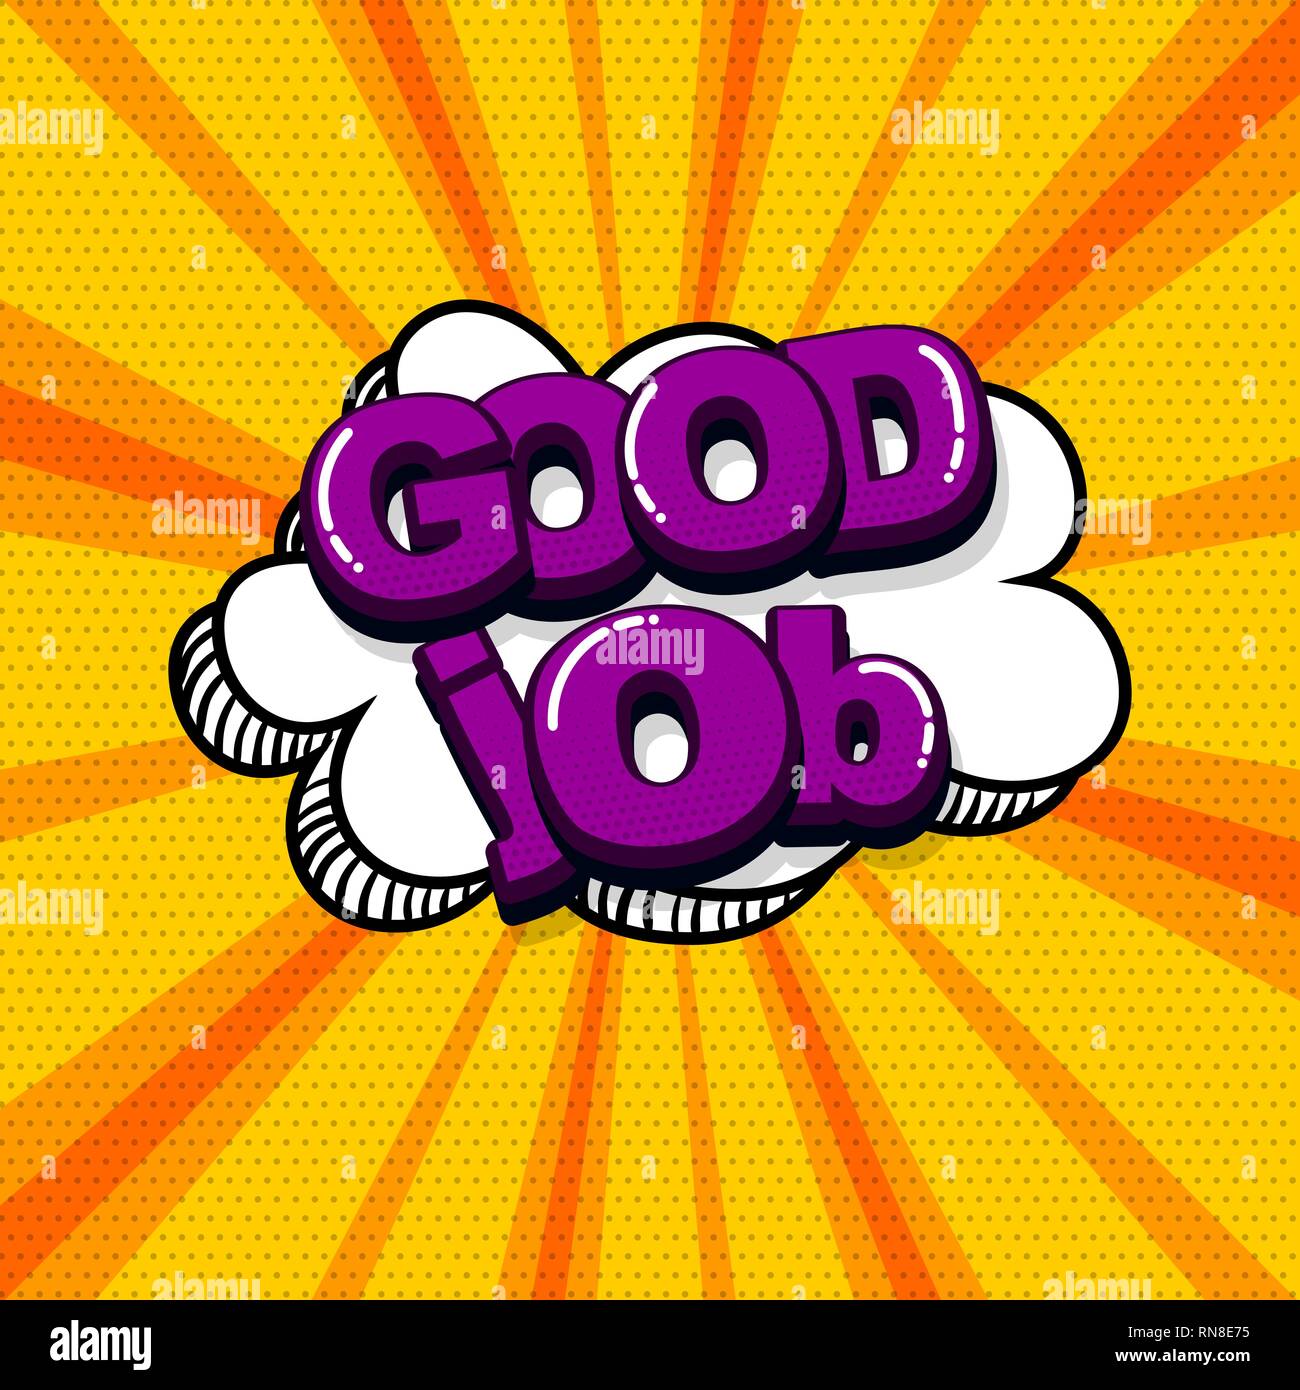 Good Job Work Comic Text Sound Effects Pop Art Style Vector